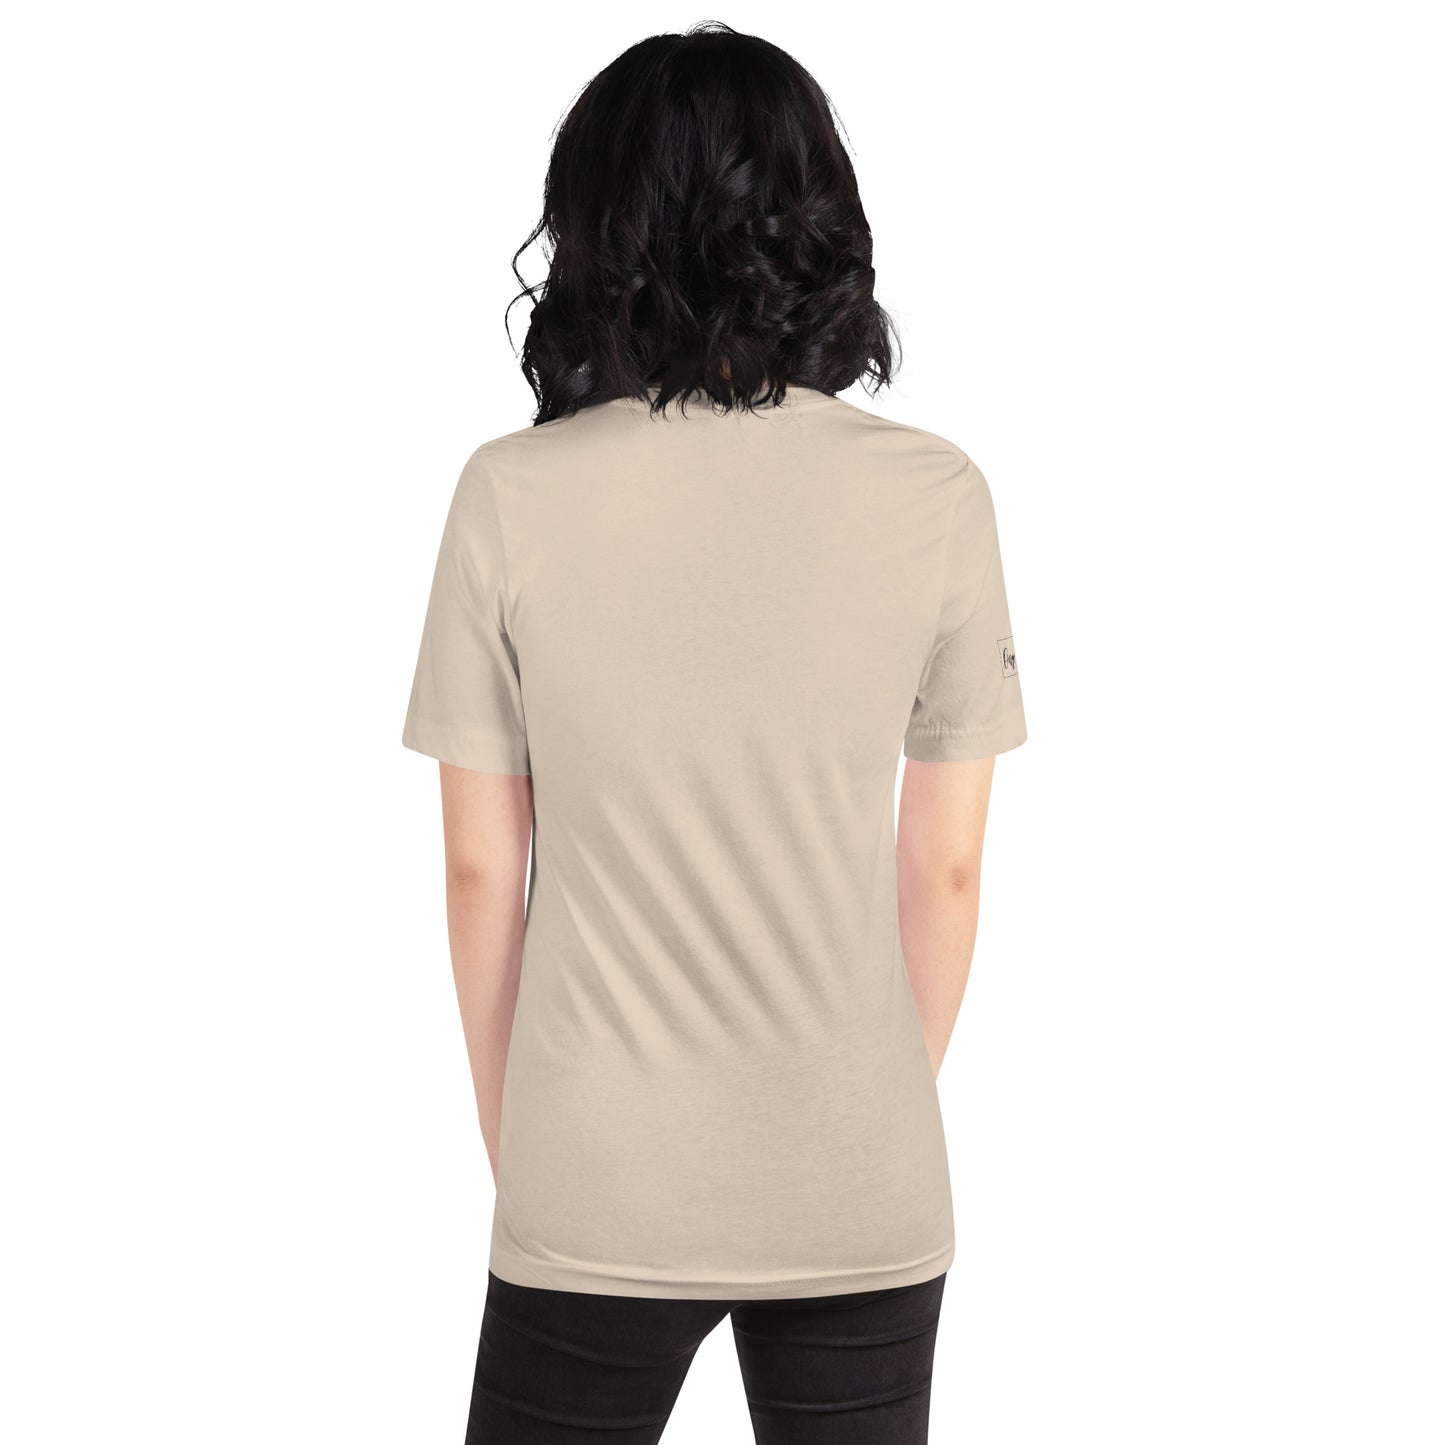 Onyx & Gold Unisex t-shirt - Bella + Canvas 3001 - Black Logo w/ Right Sleeve Logo